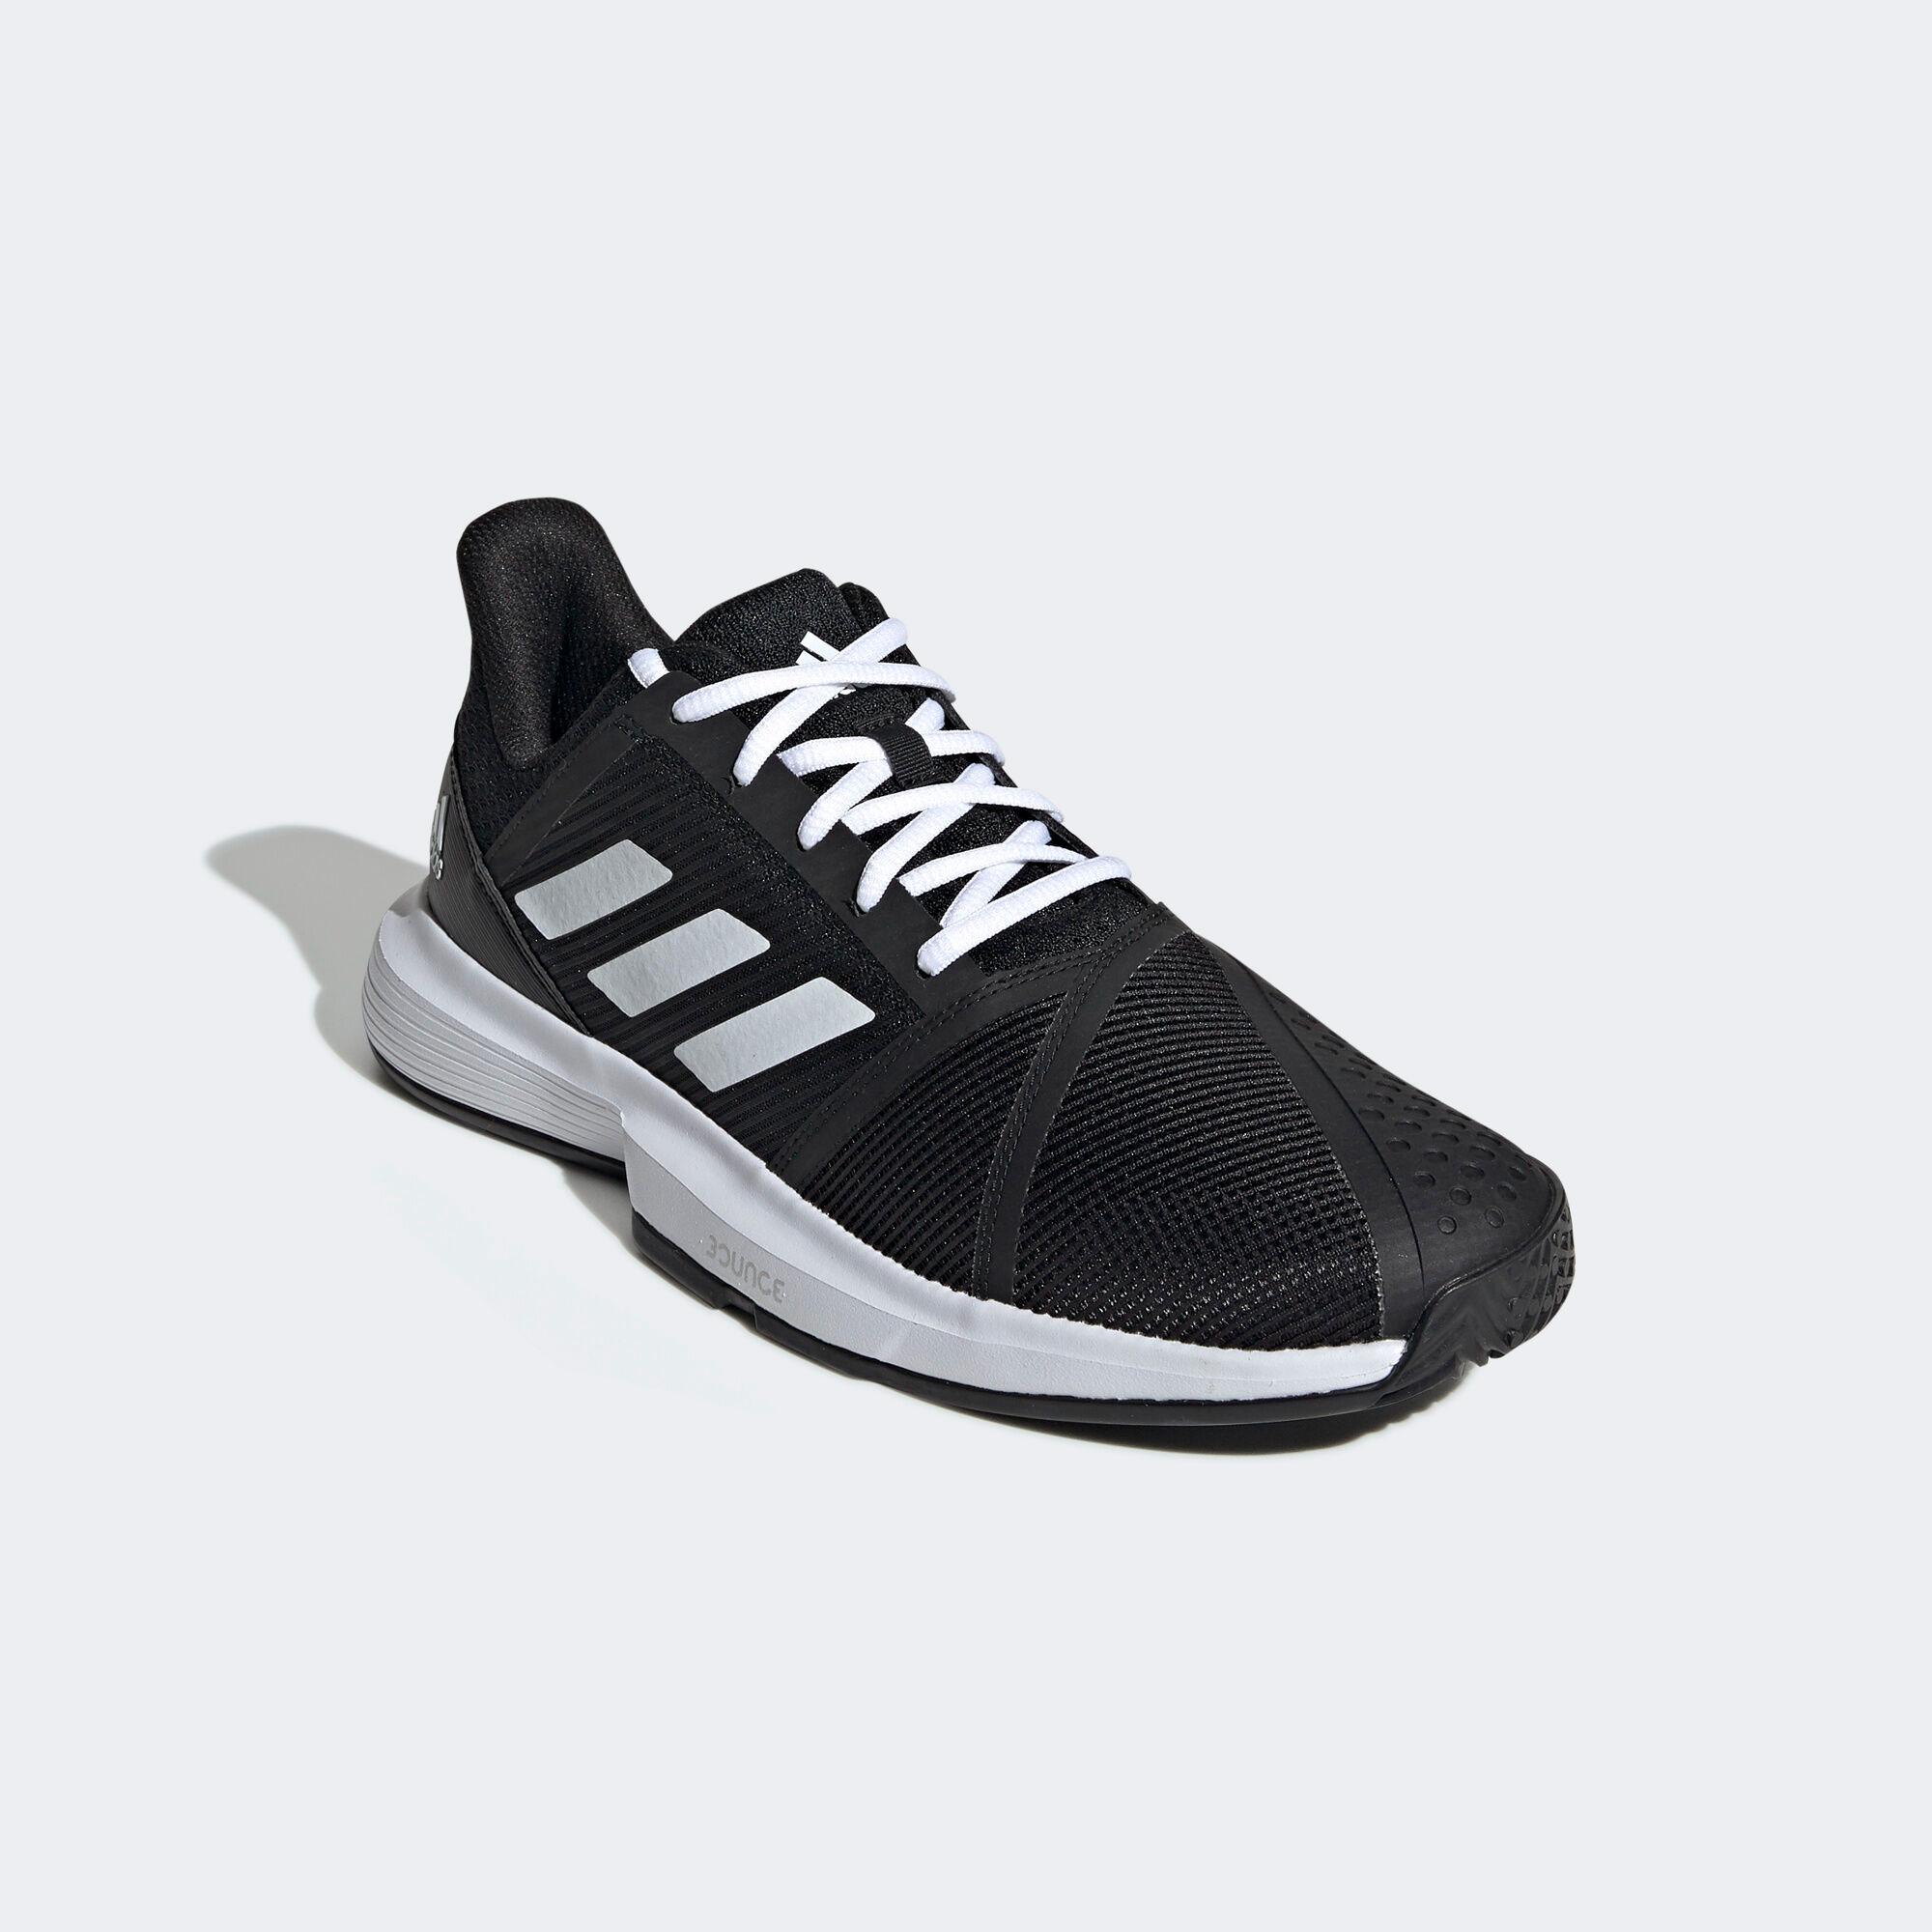 Adidas Mens CourtJam Bounce Tennis Shoes - Black/White - Tennisnuts.com